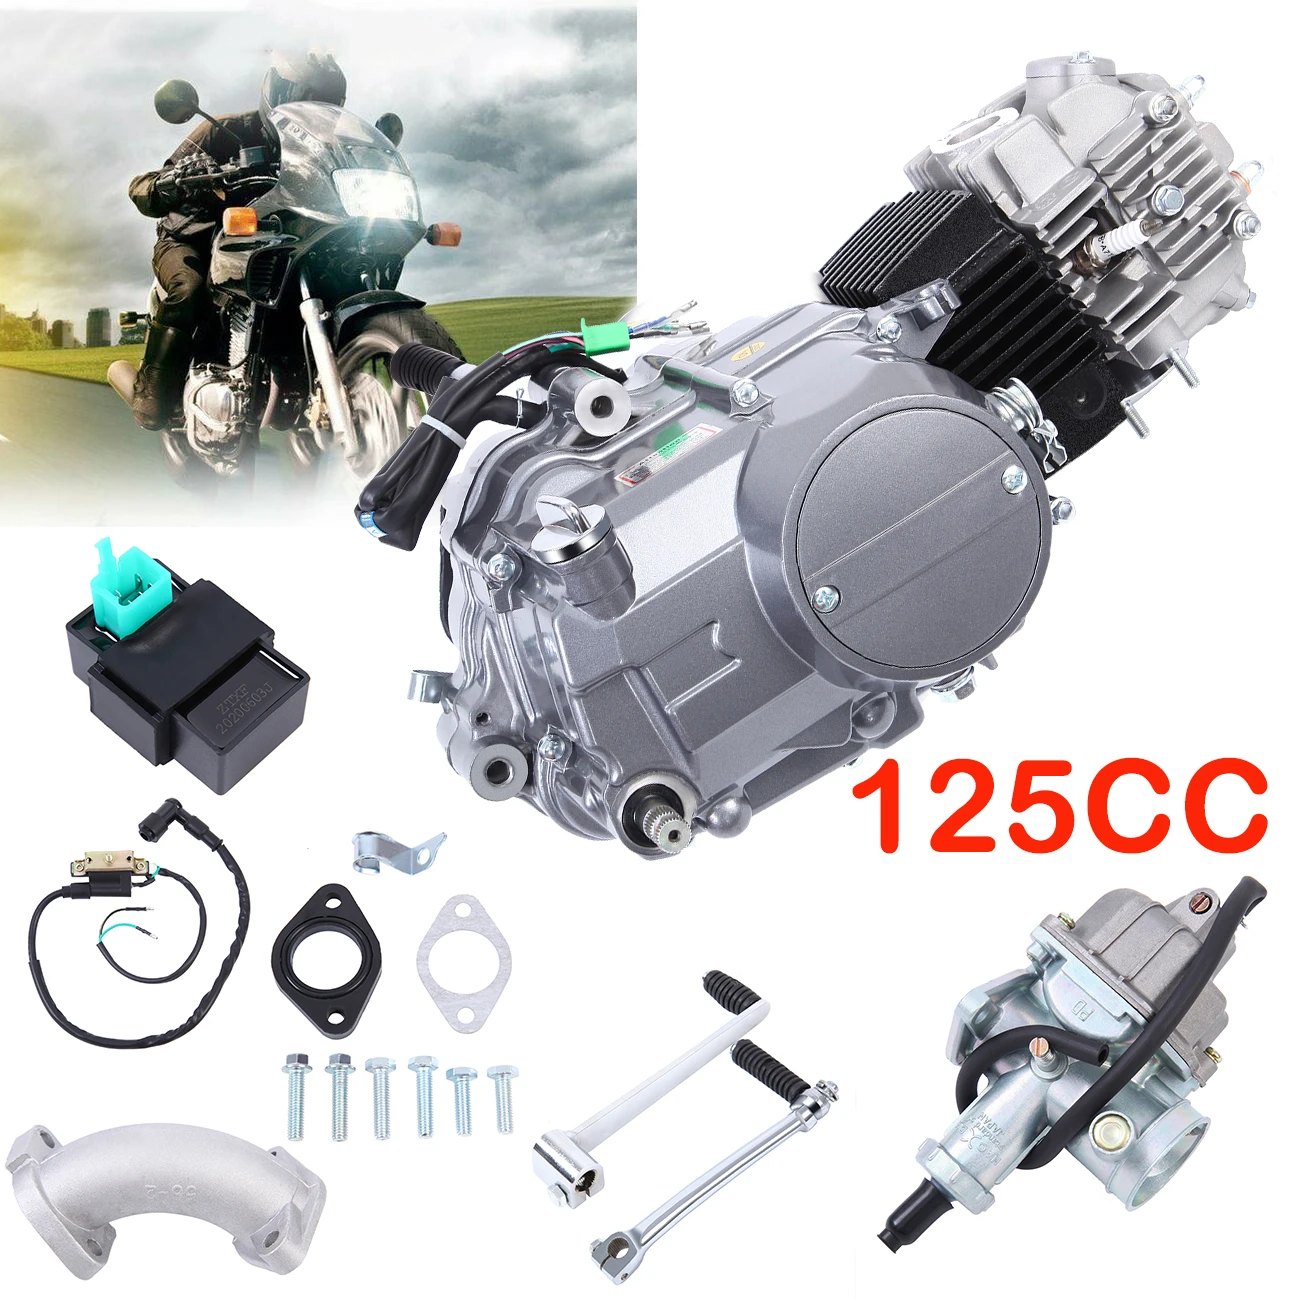 Samger 125CC Engine 4 Motorcycle Gasoline Engine Kit For Honda CRF70 Z50 Scooter ATV Go Kart Motorbike Parts|Engines| - AliExpress